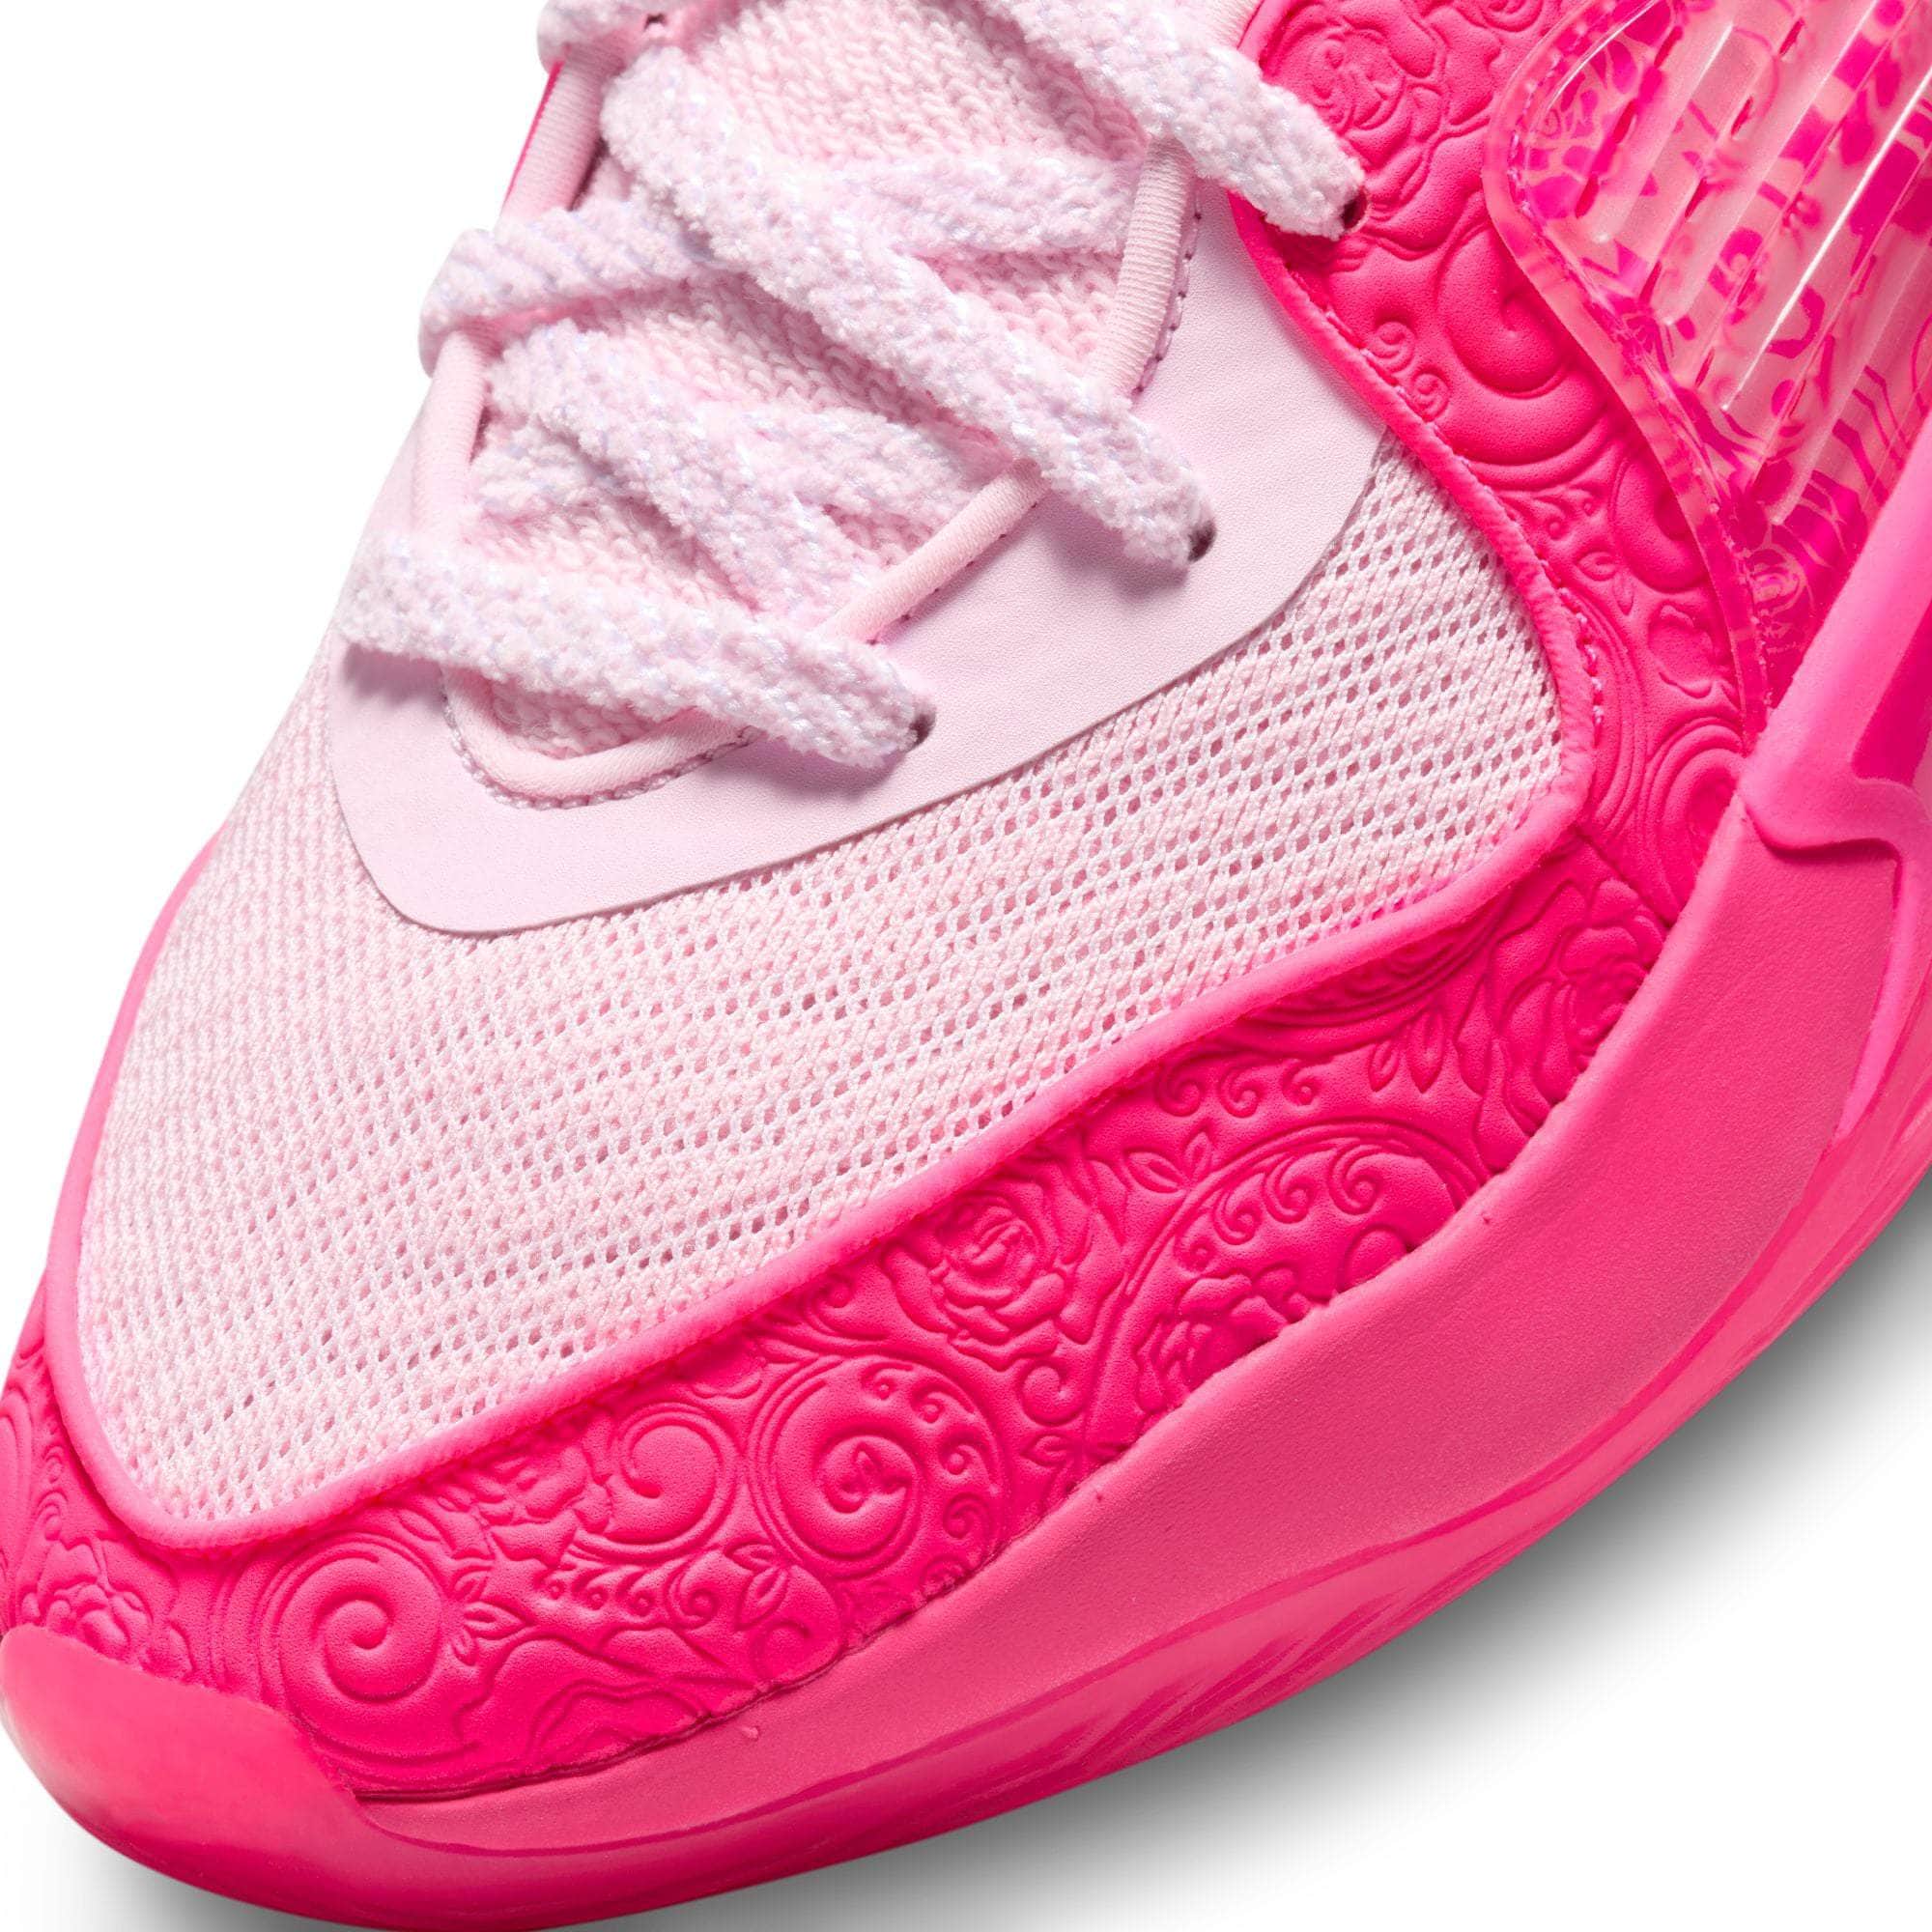 Nike FOOTWEAR Nike KD16 "Aunt Pearl" - Men's